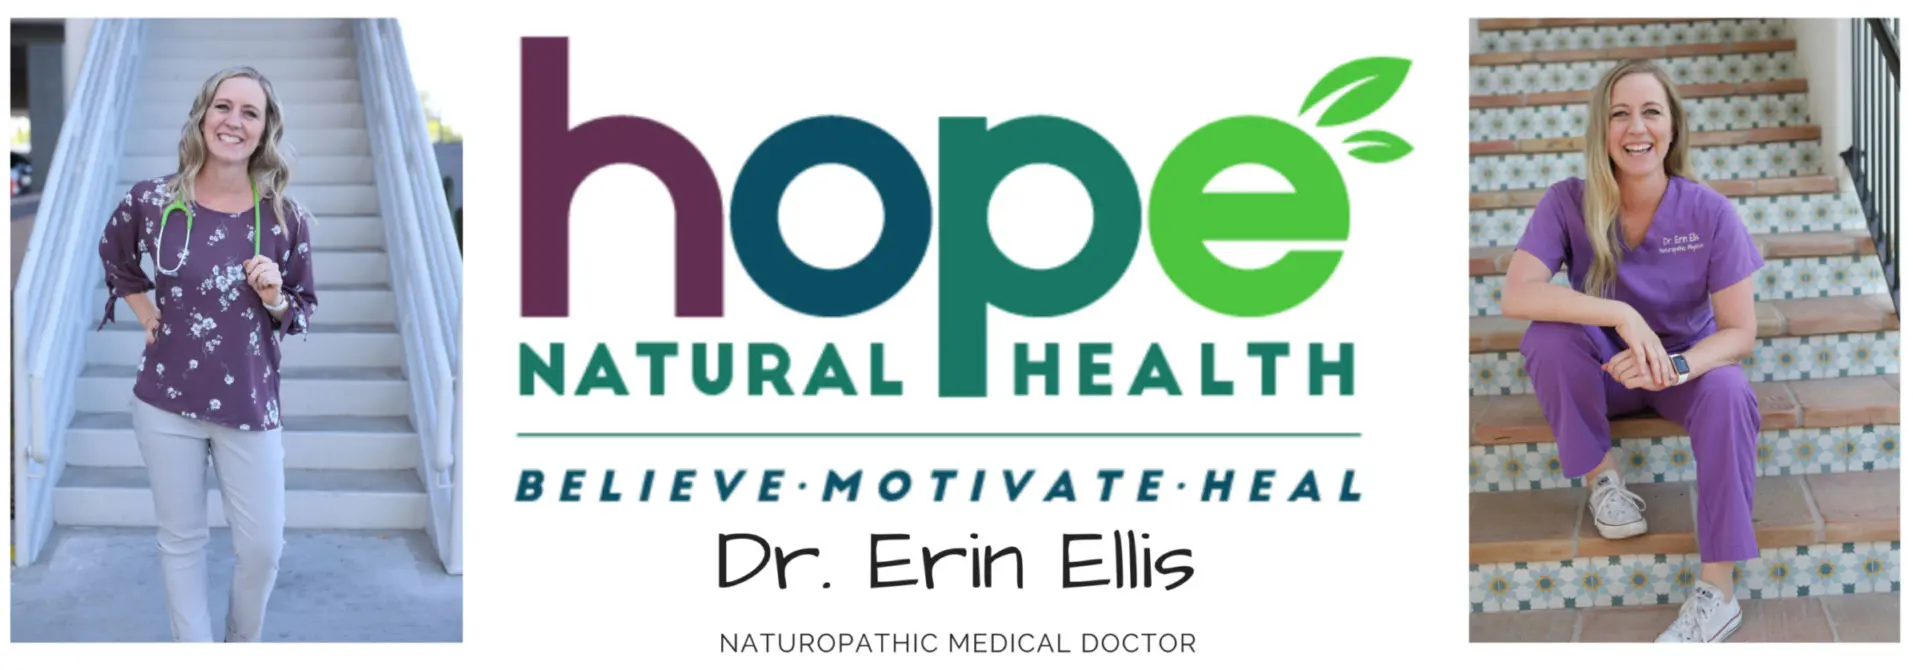 Natural doctors at Hope Natural Health on Facebook.